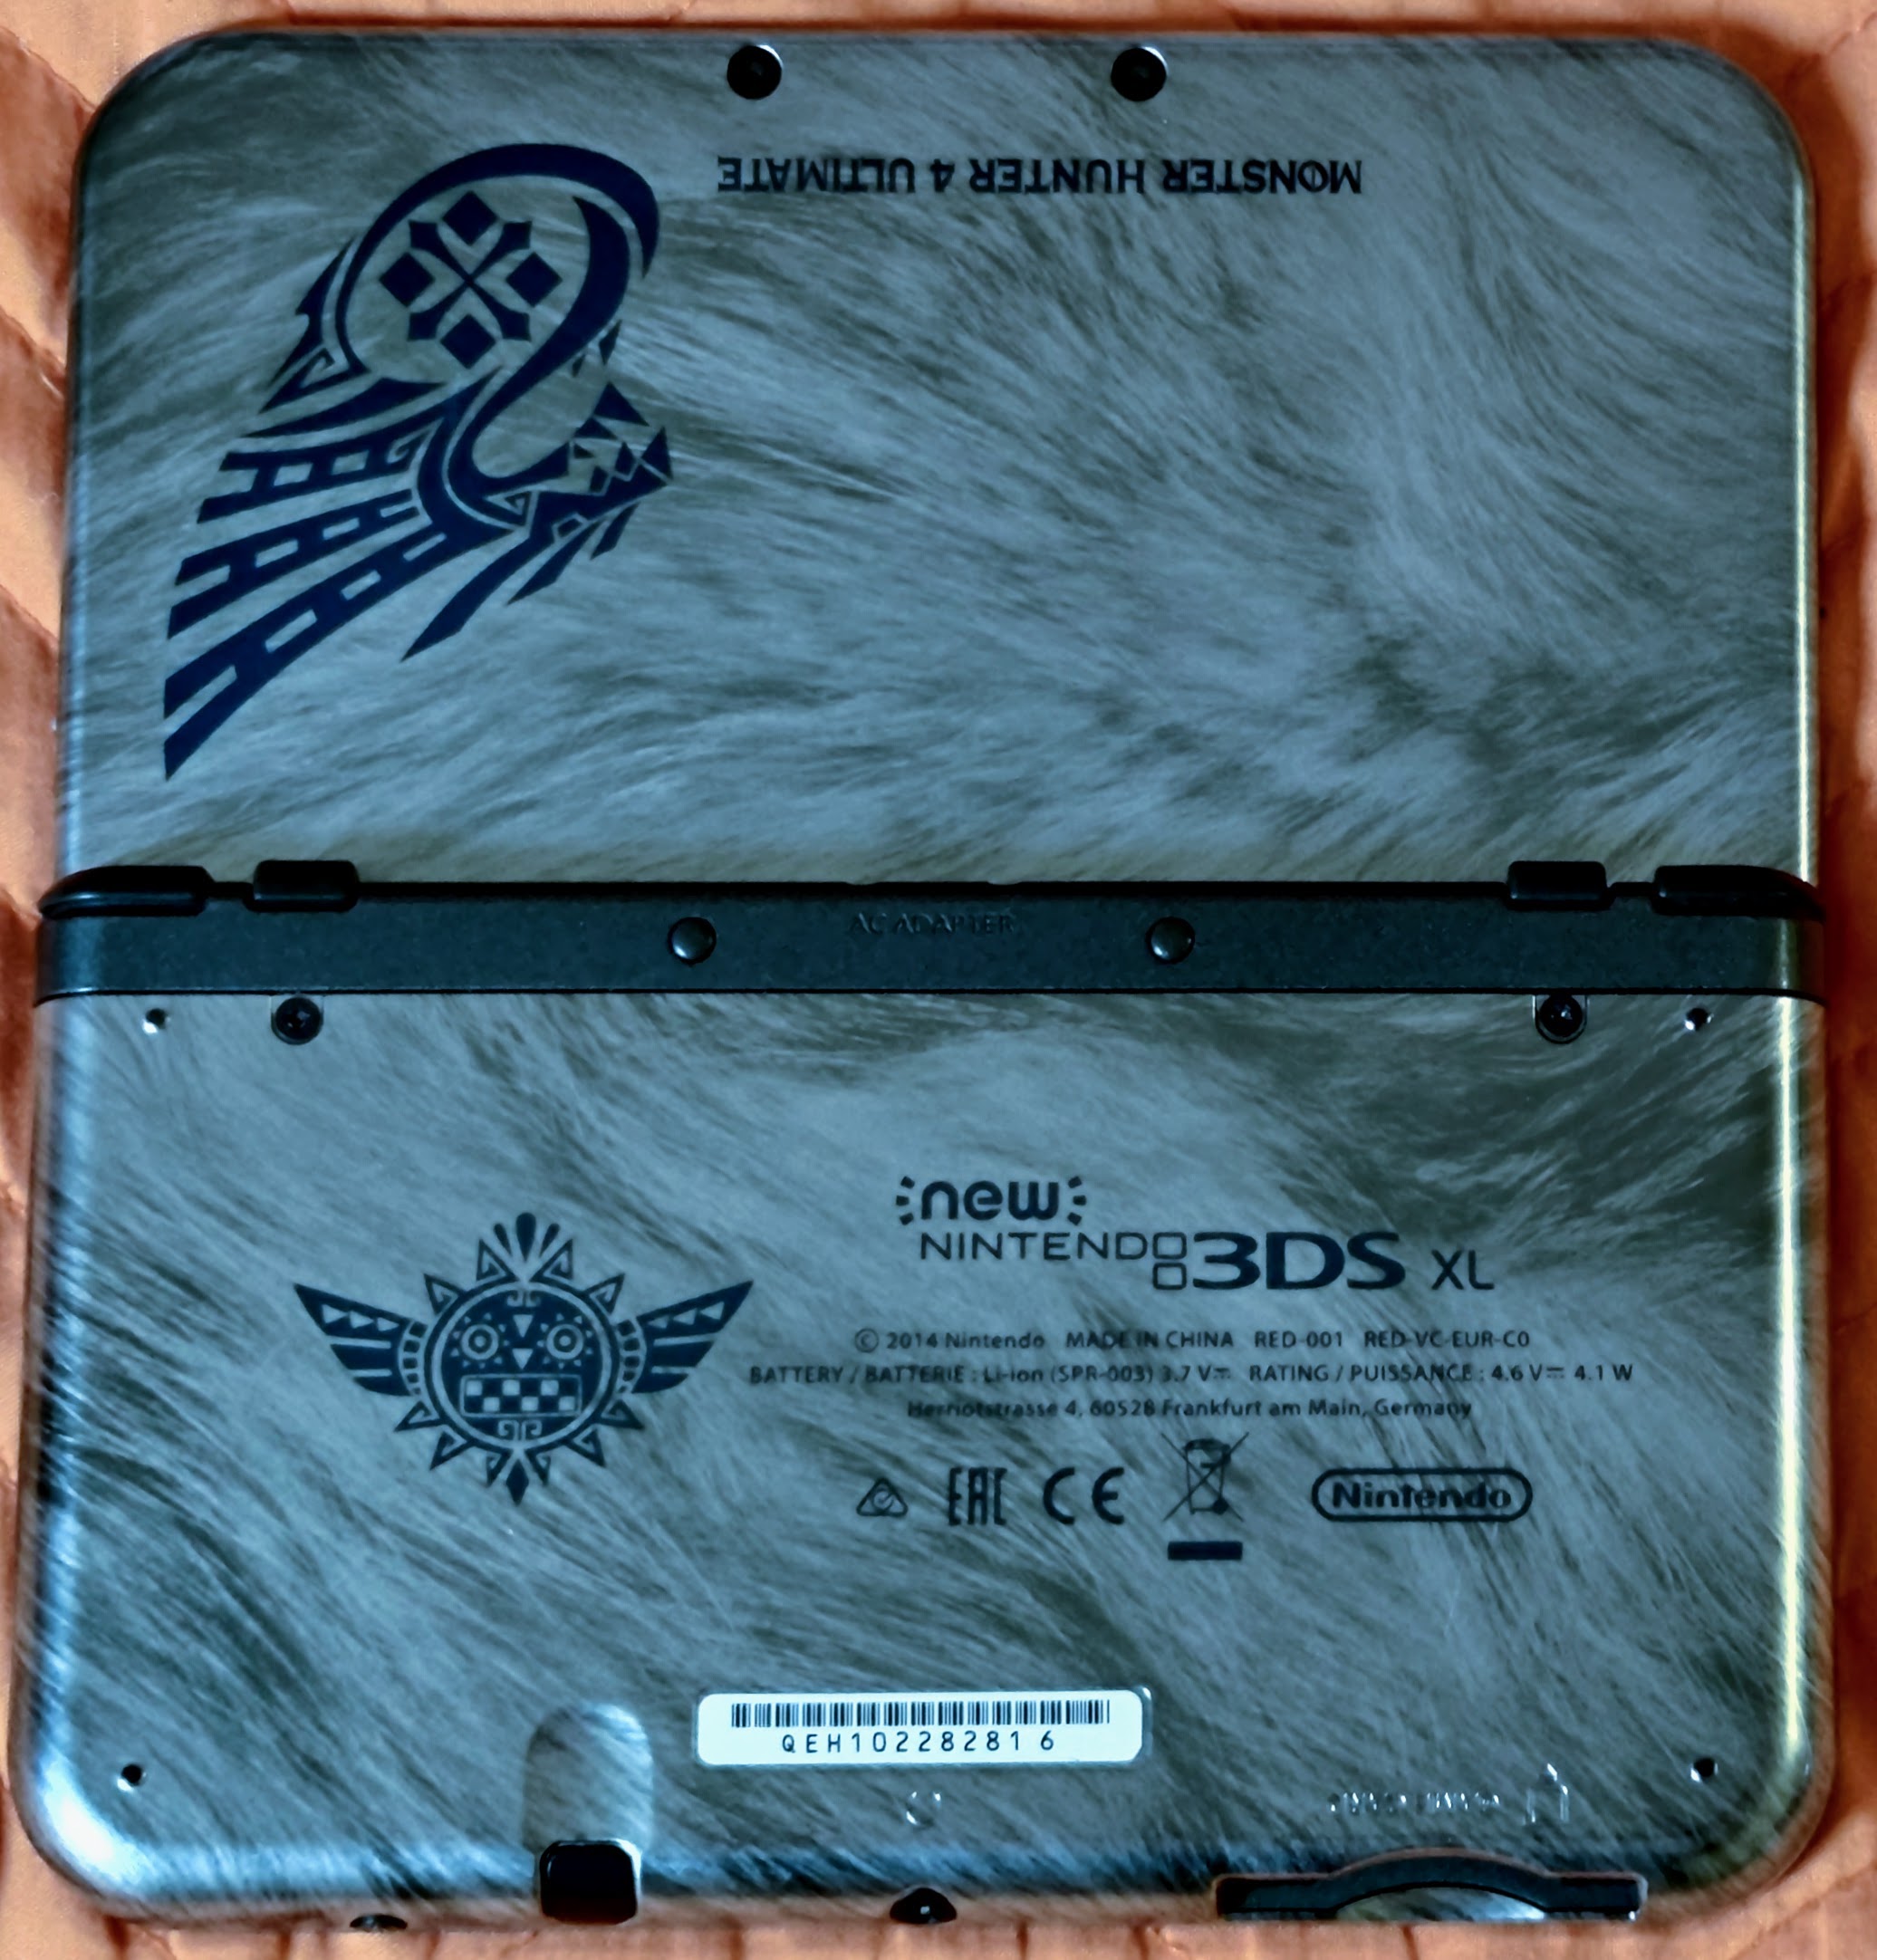 New Nintendo 3DS XL "Monster Hunter 4 Ultimate Edition", retro